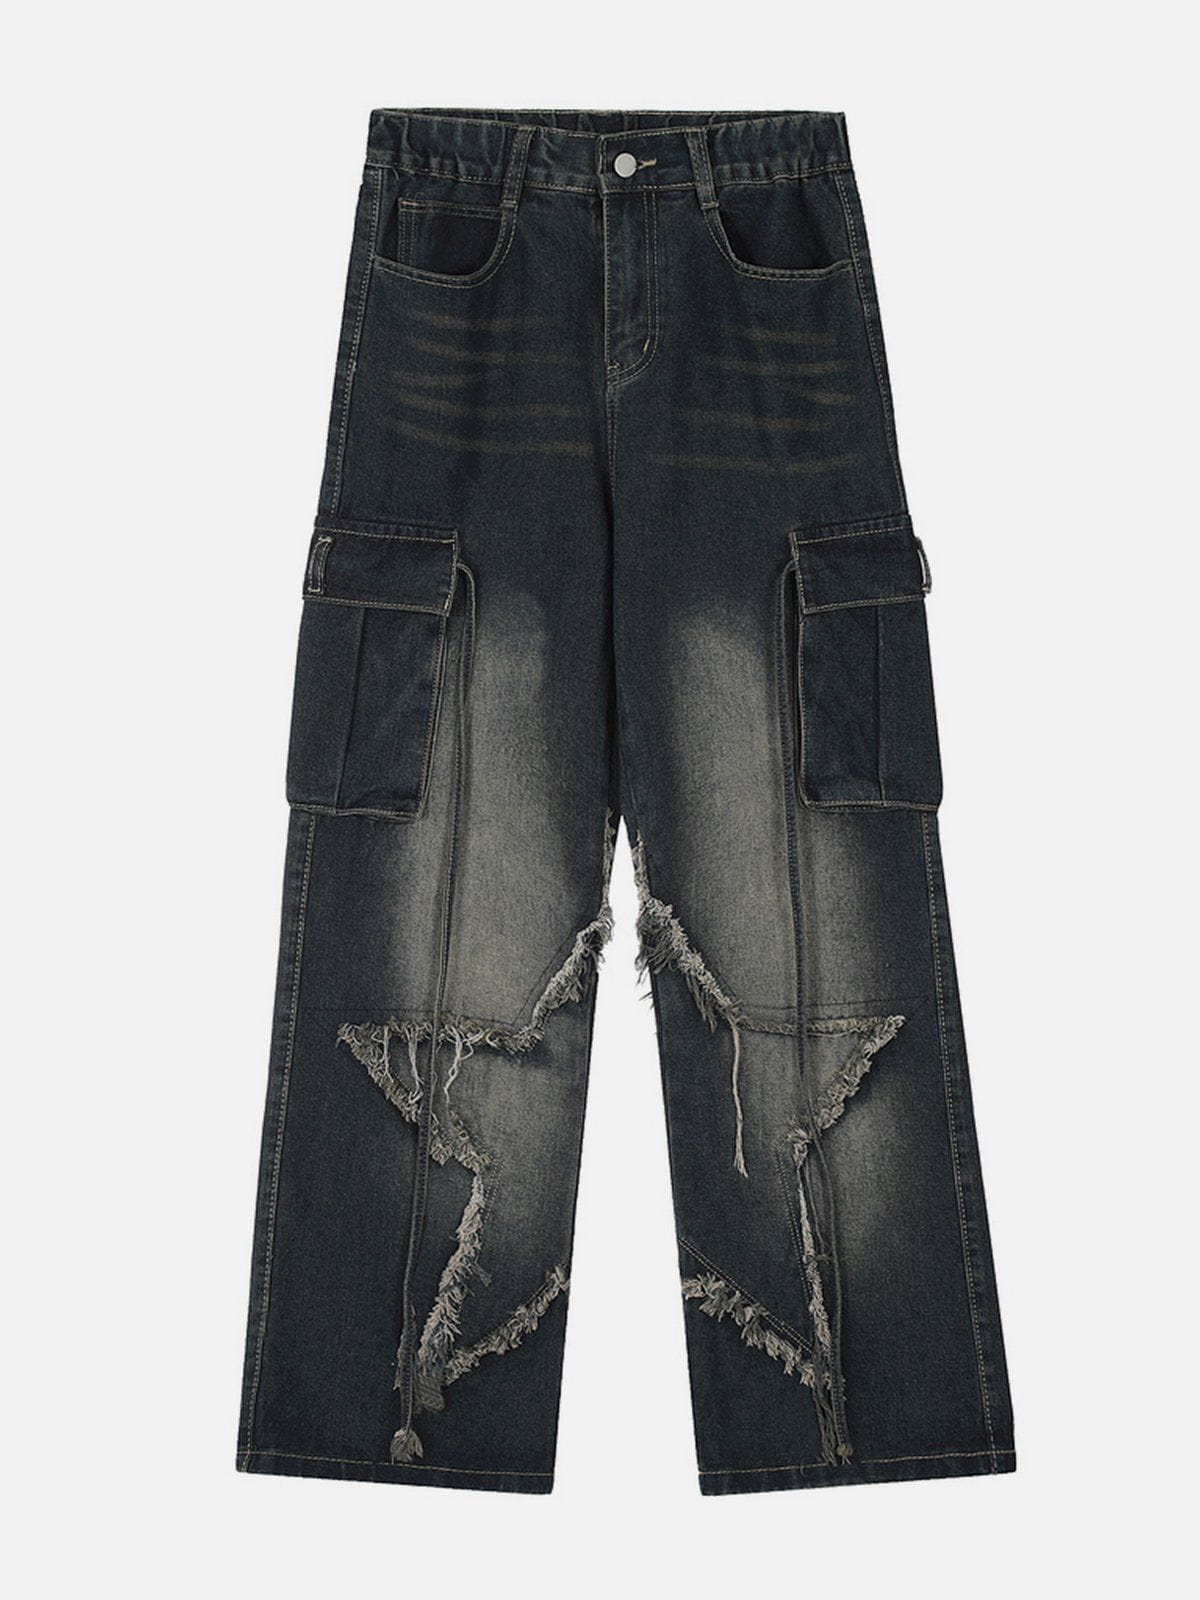 Aelfric Eden Multi Pocket Washed Jeans – Aelfric eden